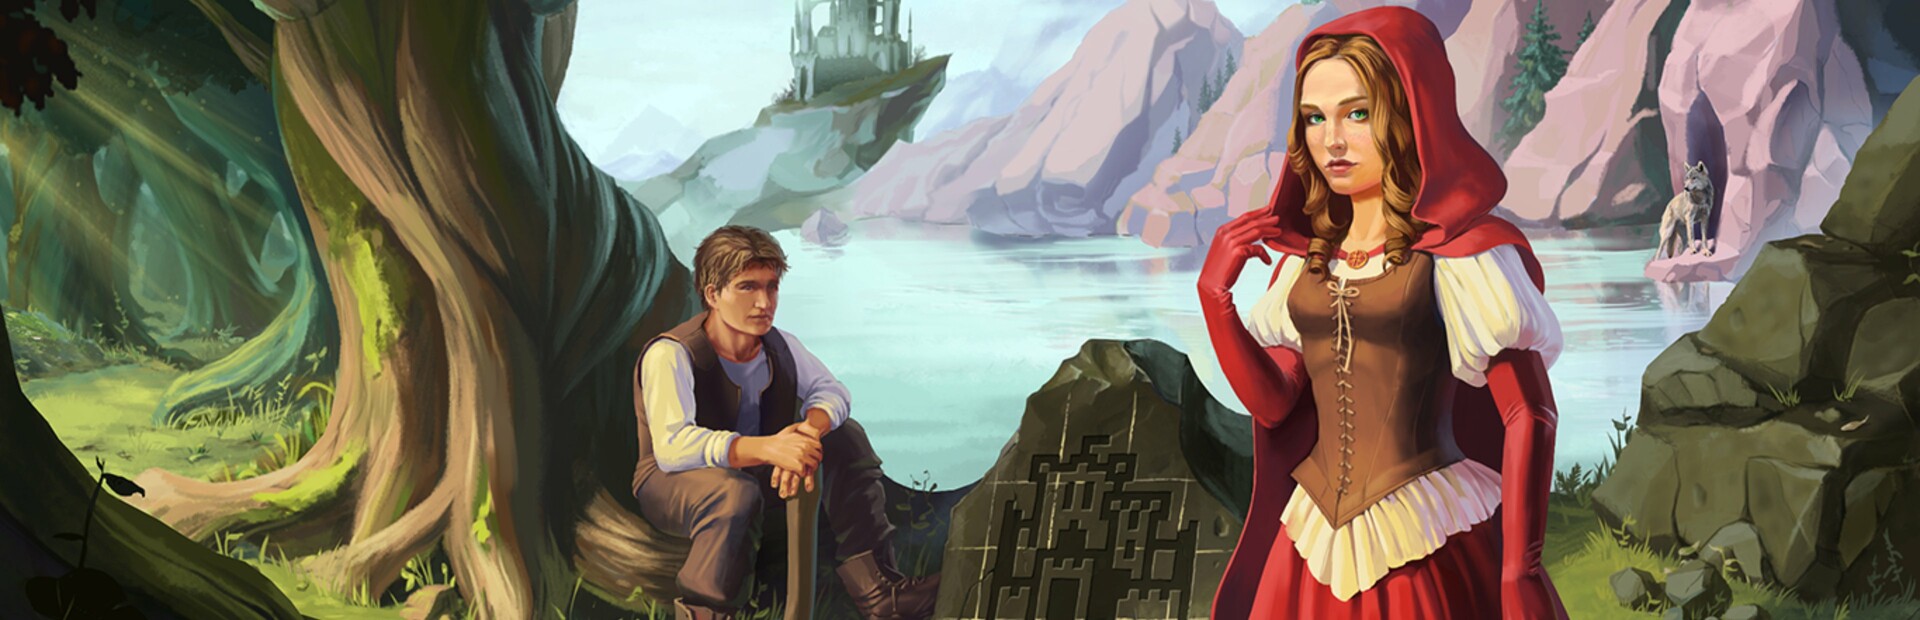 Picross Fairytale - nonogram: Red Riding Hood secret cover image